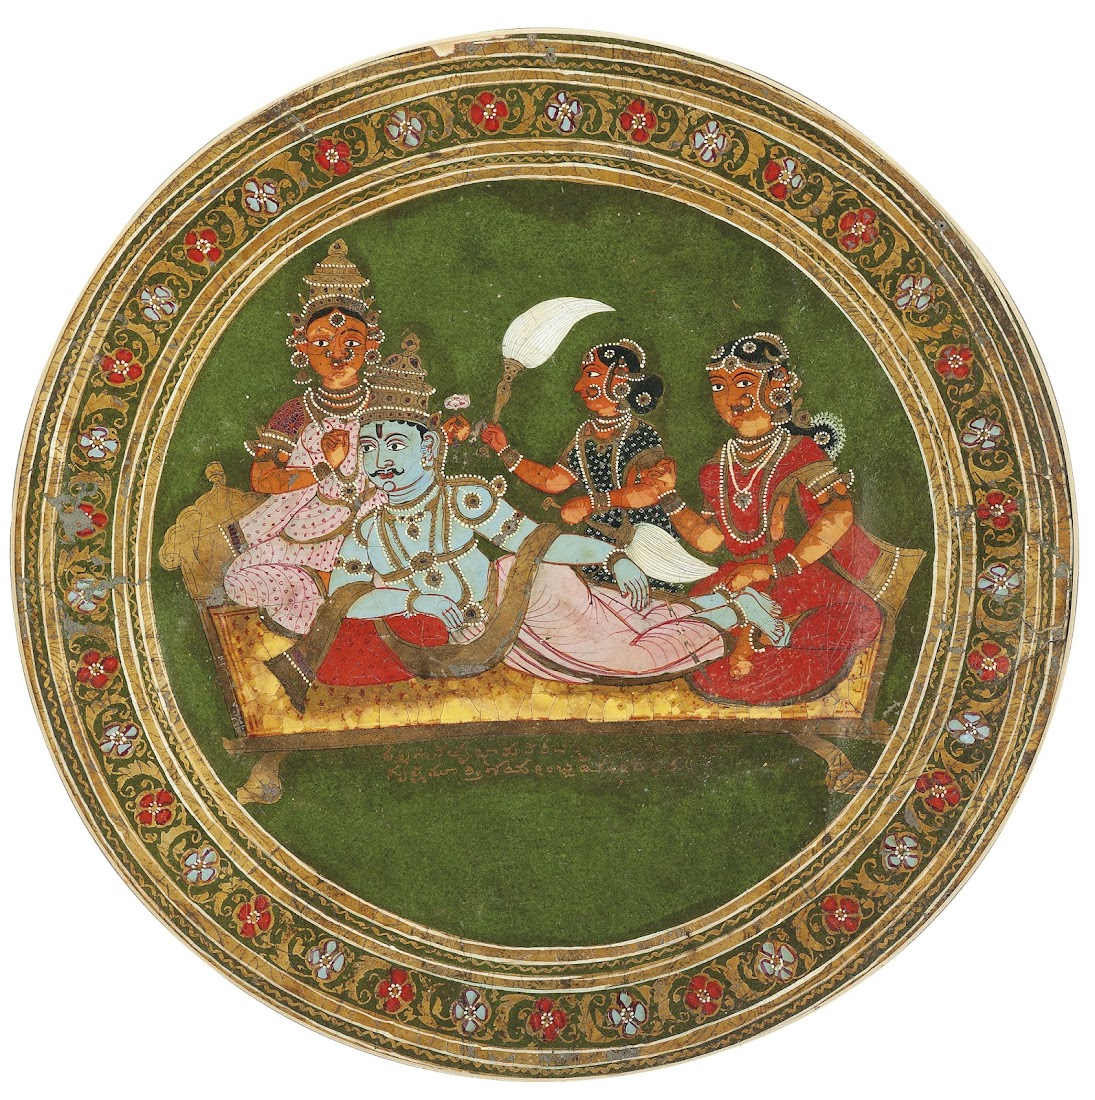 Illustrations of Hindu Gods, Goddesses and Animal Figures